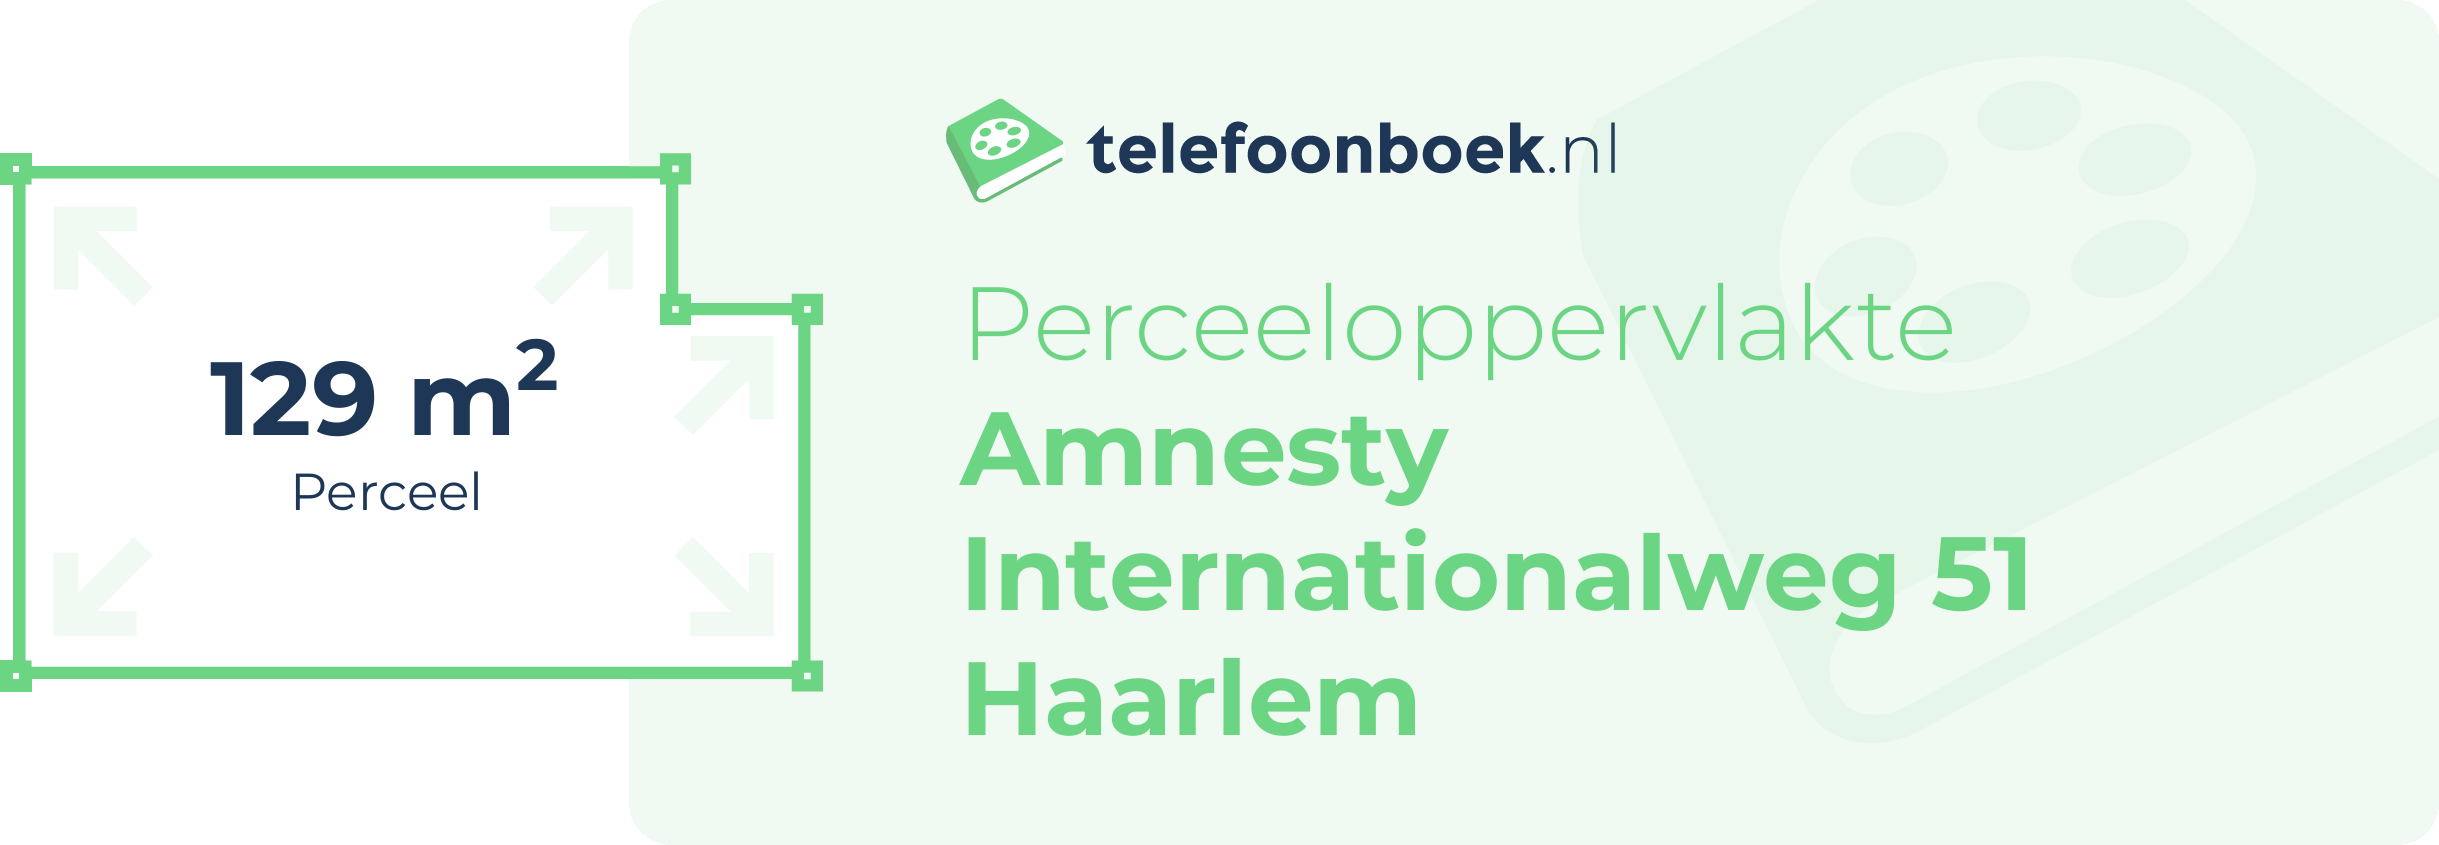 Perceeloppervlakte Amnesty Internationalweg 51 Haarlem